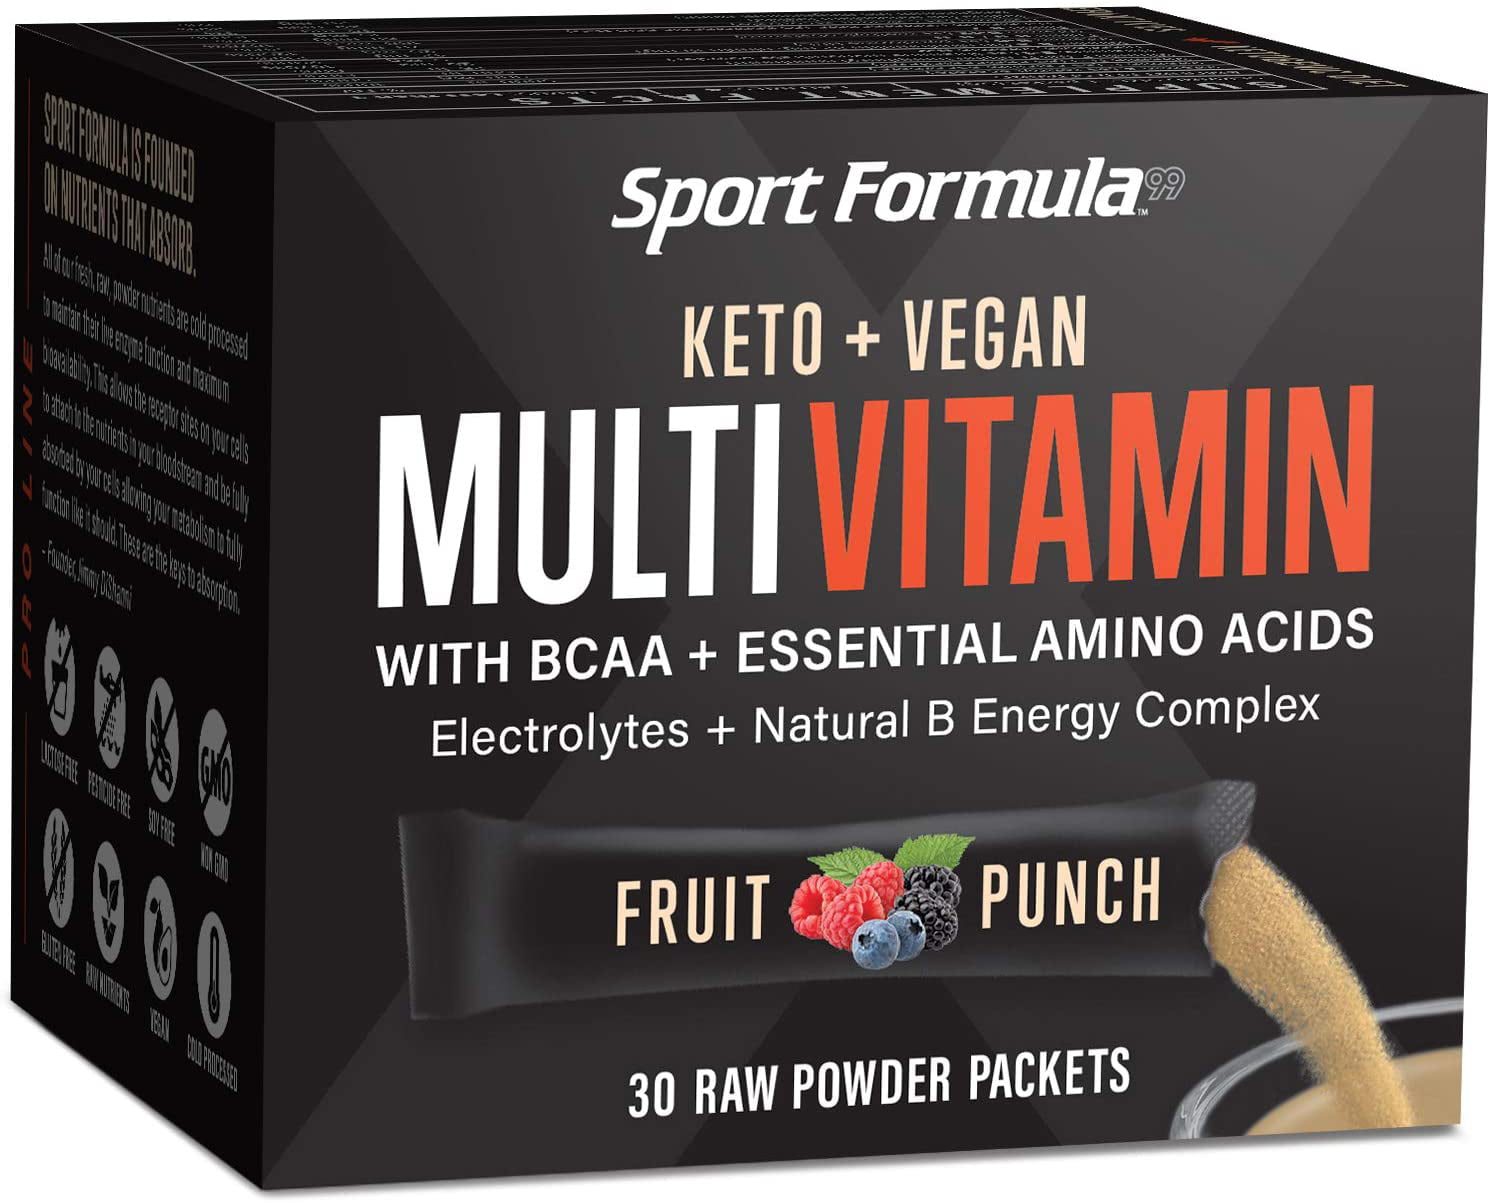 Liquid Multivitamin Drink Mix Vitamin Powder BCAA Won't Upset Your Daily Keto for Men and Women Amino Acid Powder Fruit Punch Packet Multivitamin Powder Electrolytes - Walmart.com